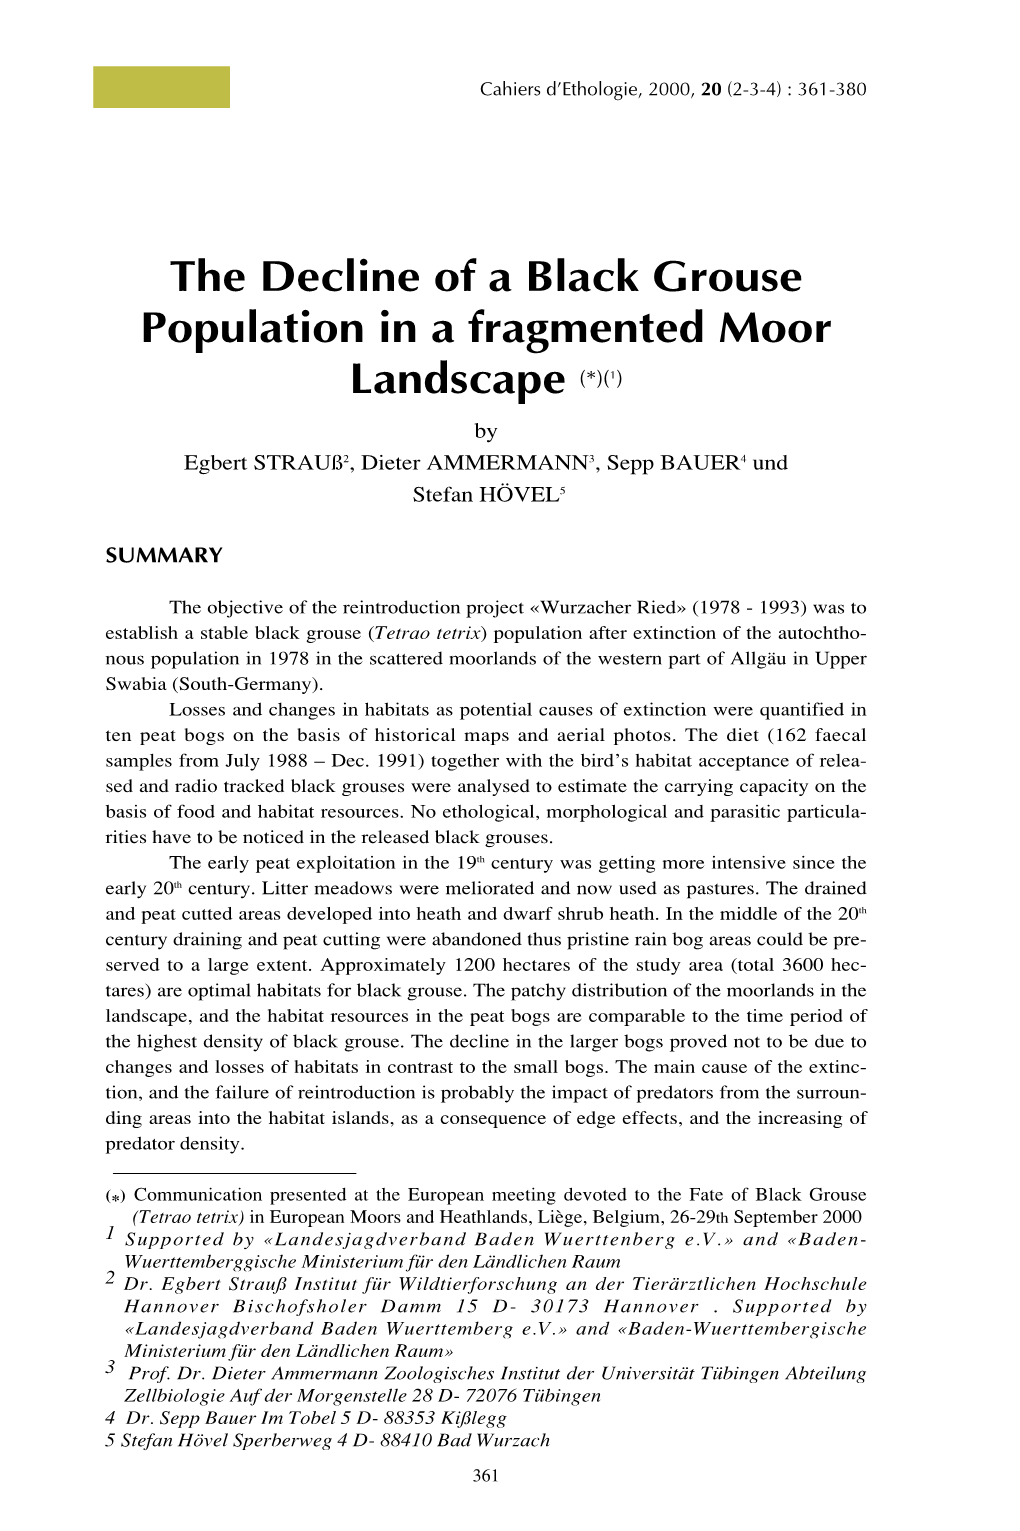 The Decline of a Black Grouse Population in a Fragmented Moor Landscape (*)(1) by Egbert Strauß2, Dieter AMMERMANN3, Sepp BAUER4 Und Stefan HÖVEL5